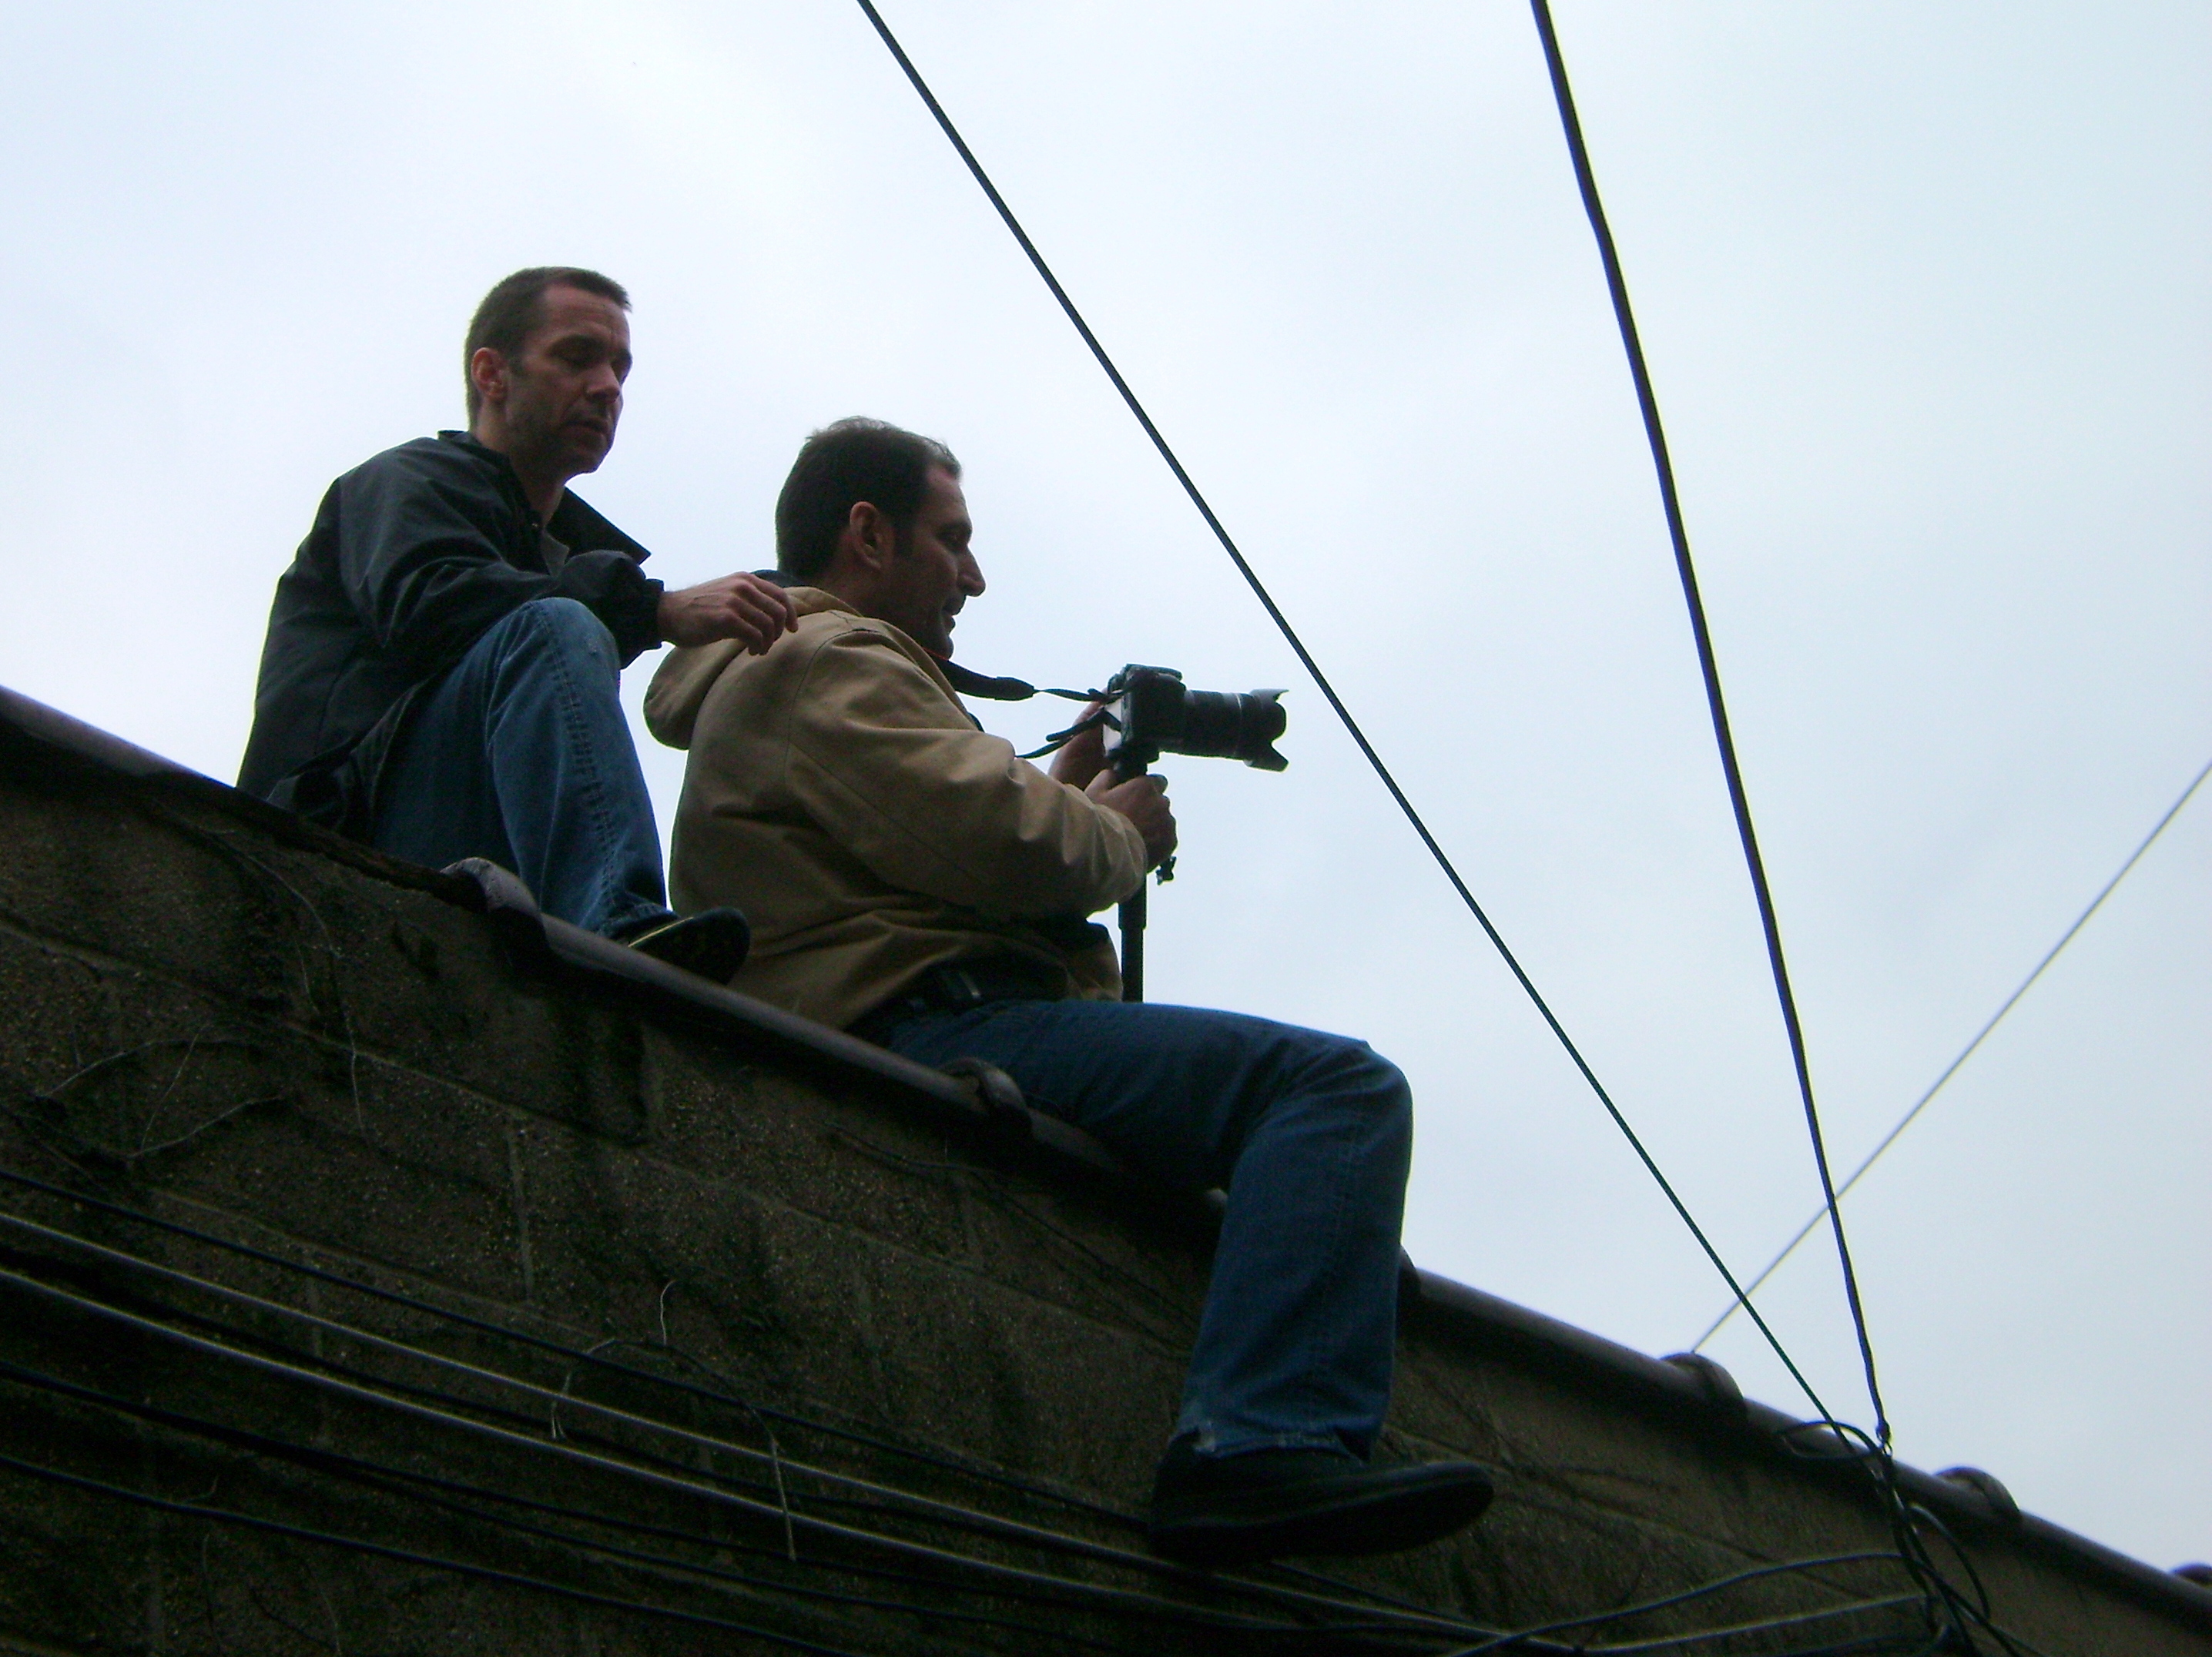 Lawrence Greenberg shooting Amazon Studios/ADP Films 'The Velvet Elvis' with Jon Nichols providing rooftop safety.